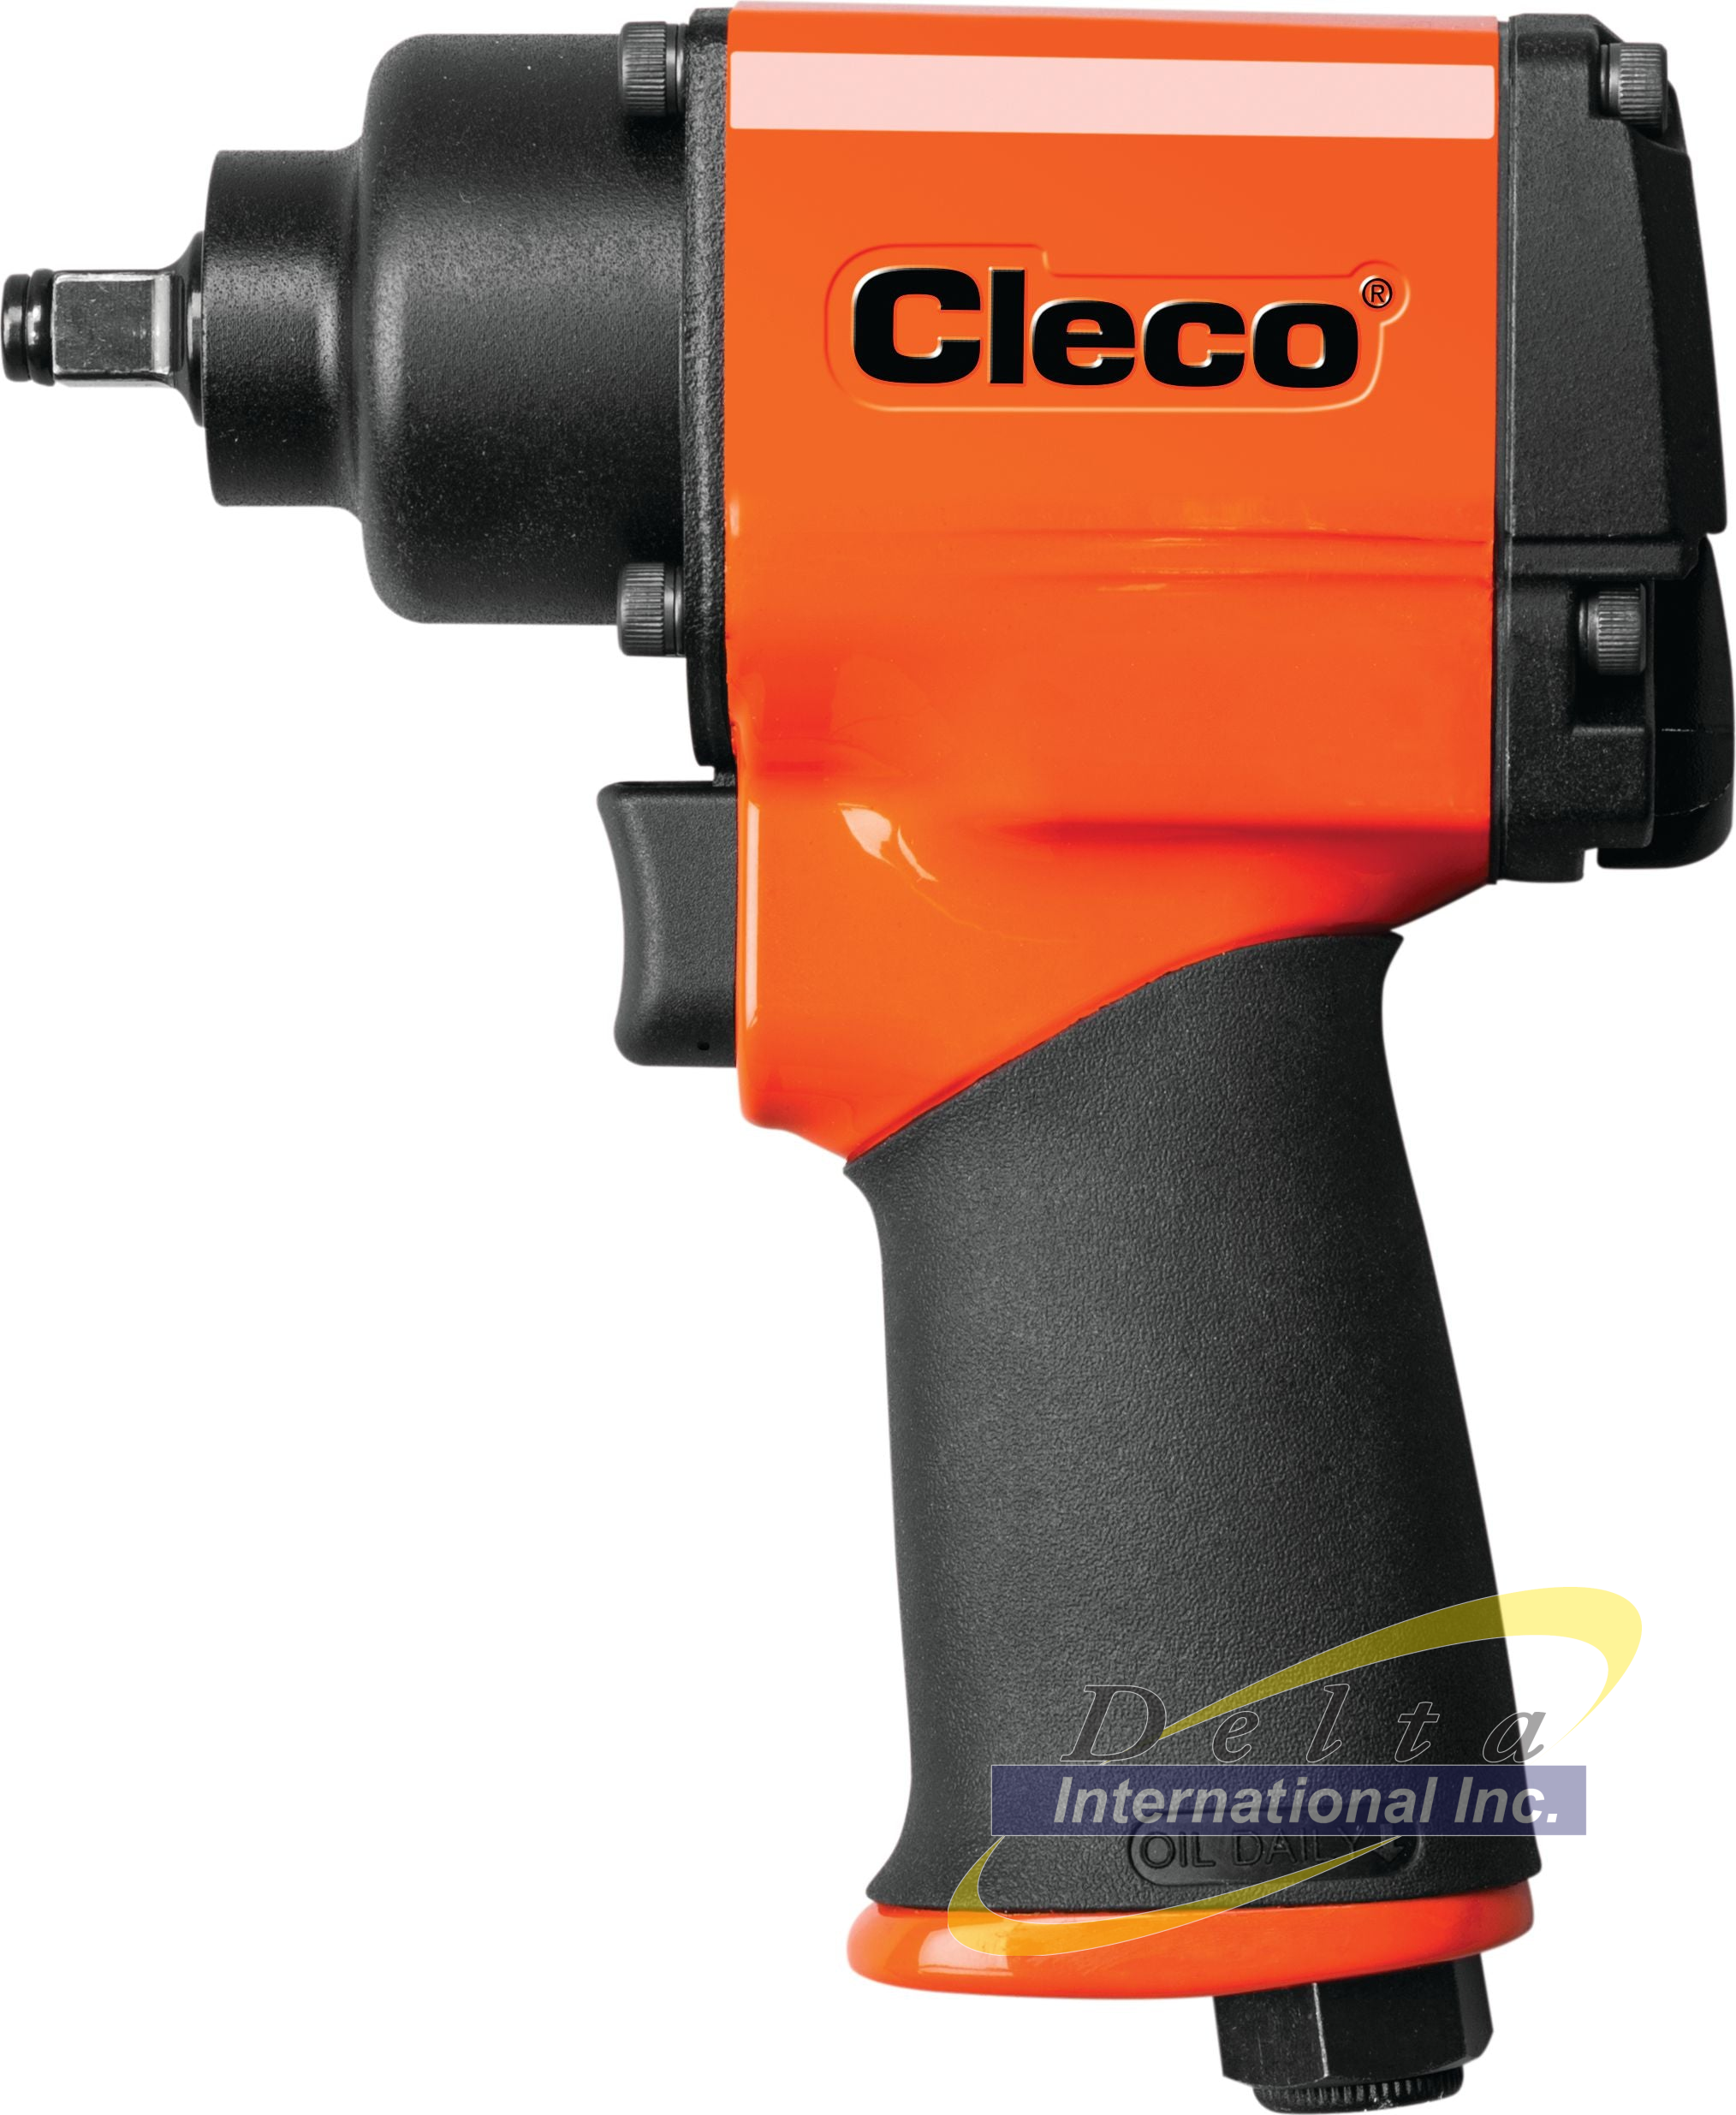 Cleco CWM-750P - CWM Metal Housing Series Impact Wrench